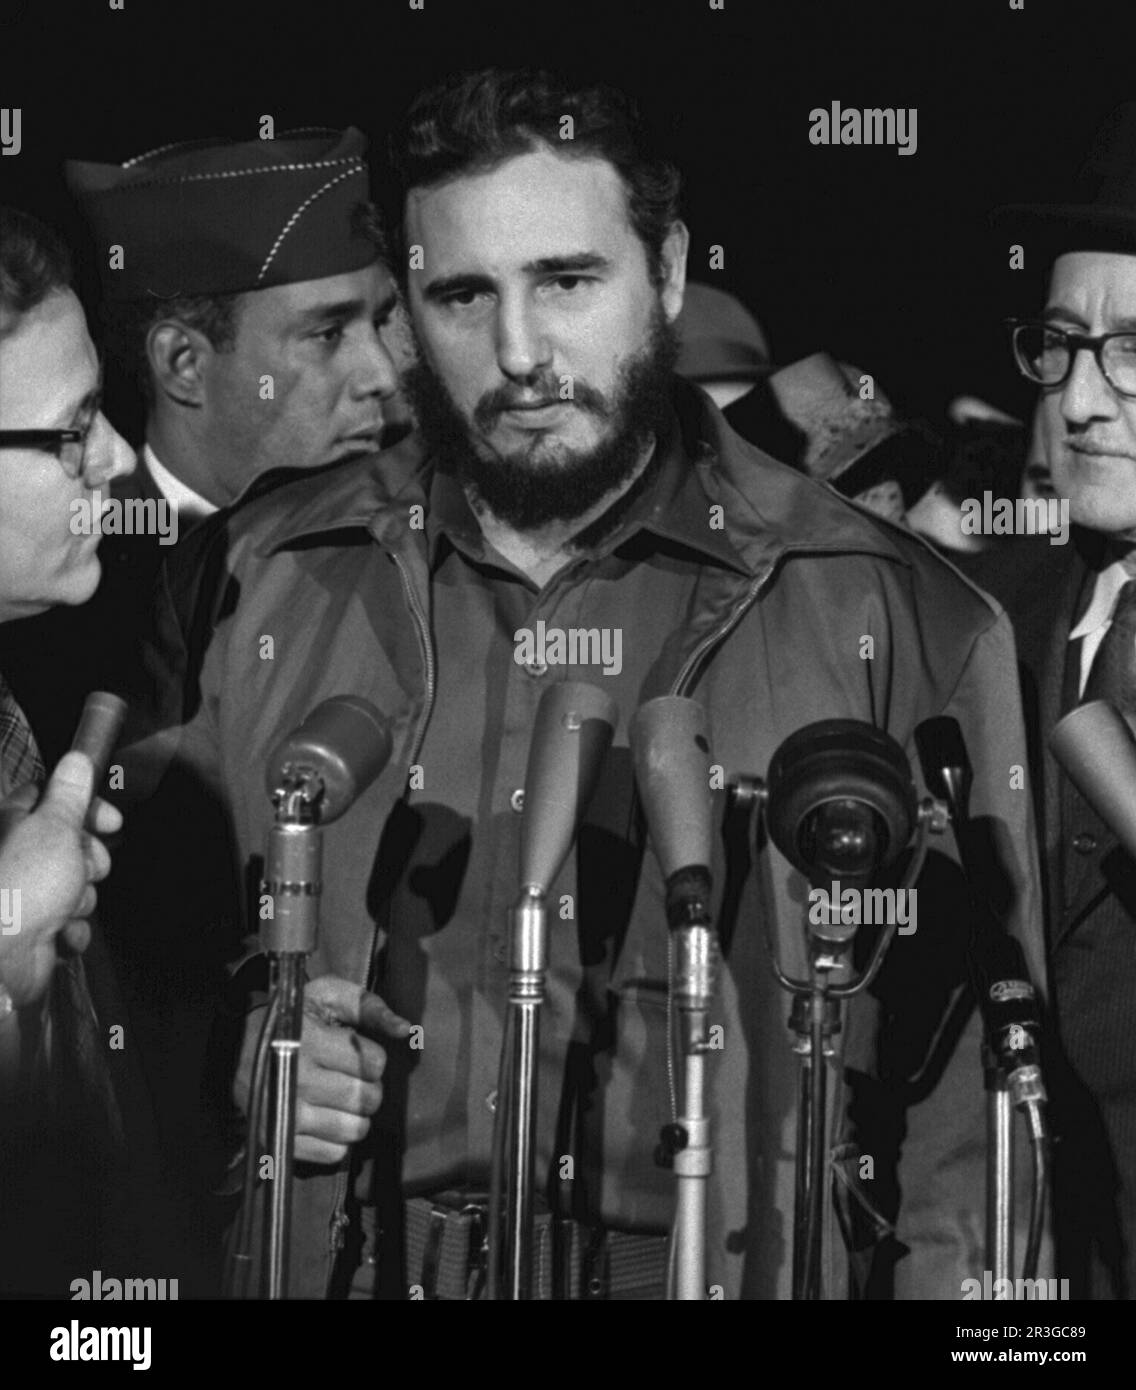 Fidel Castro speaking in front of microphones. Stock Photo